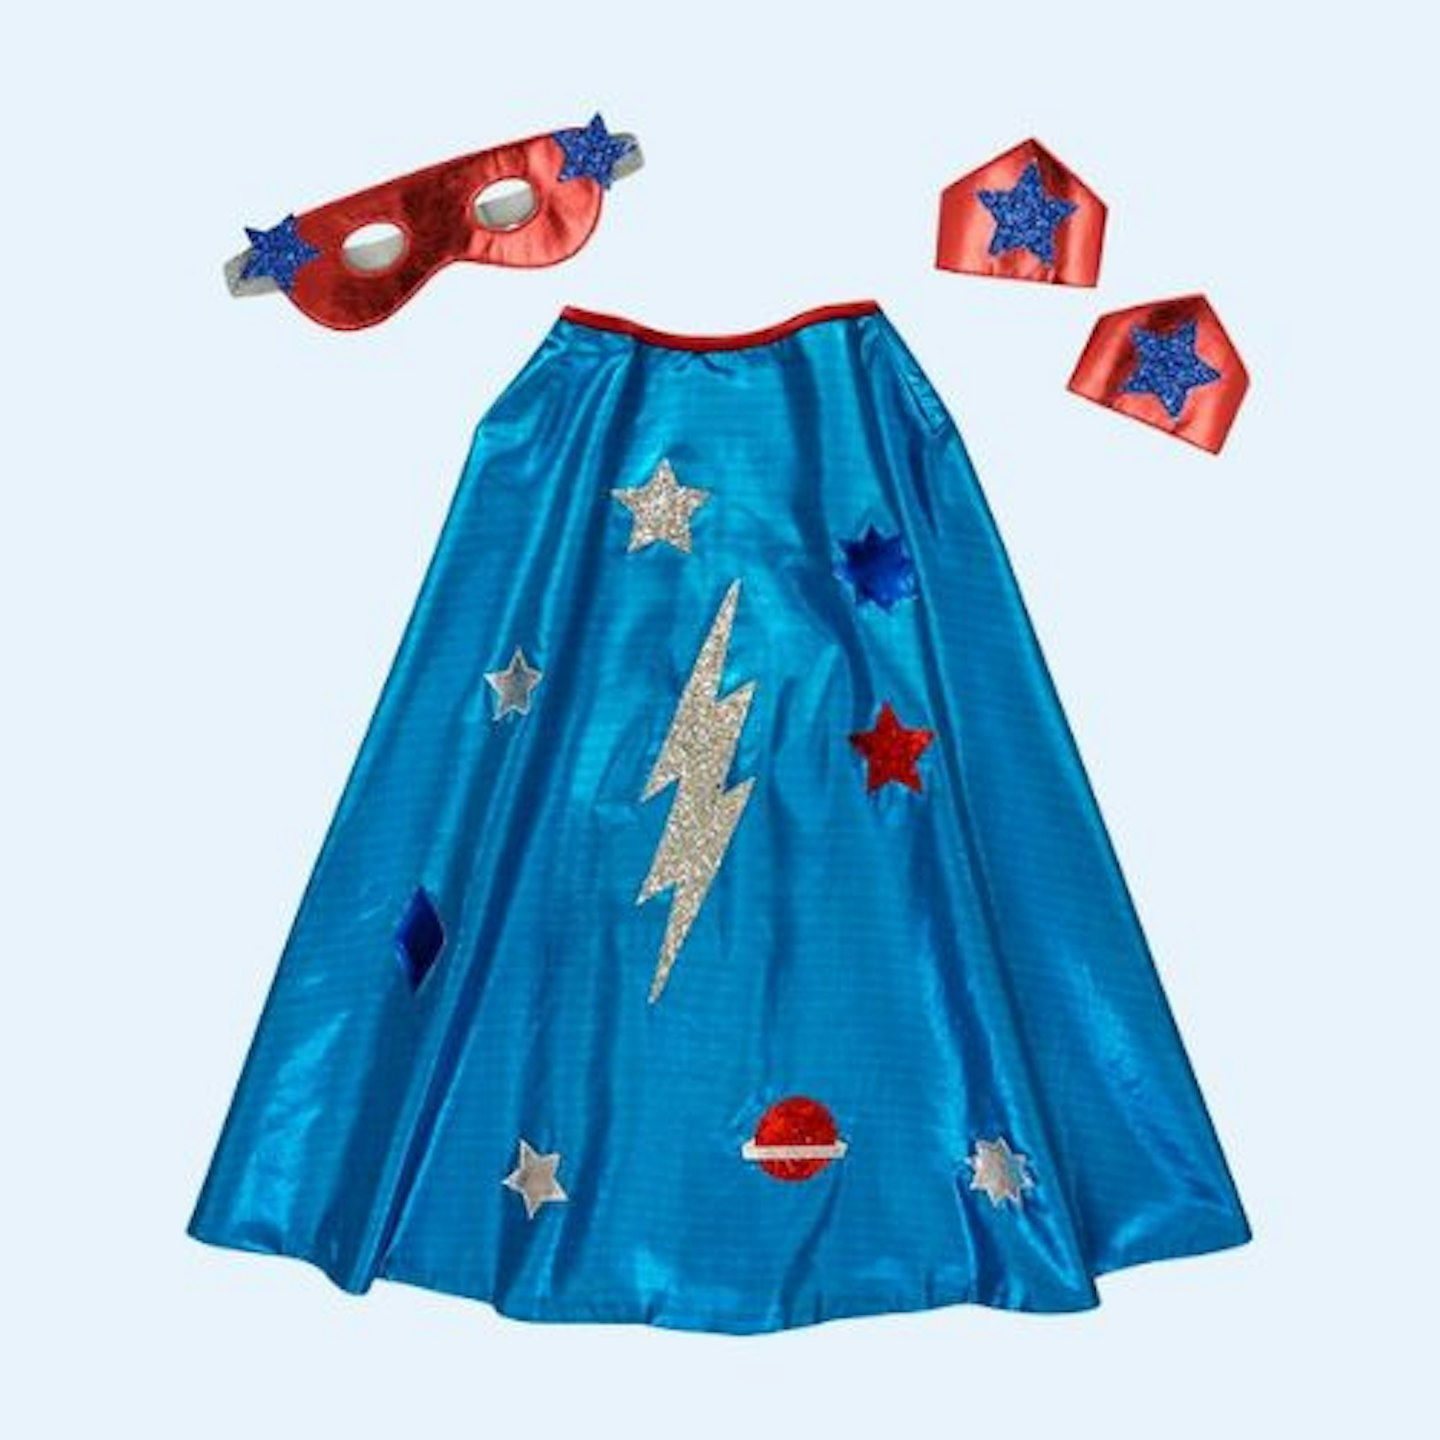 Kids Halloween Costumes: Superhero Cape Dress Up